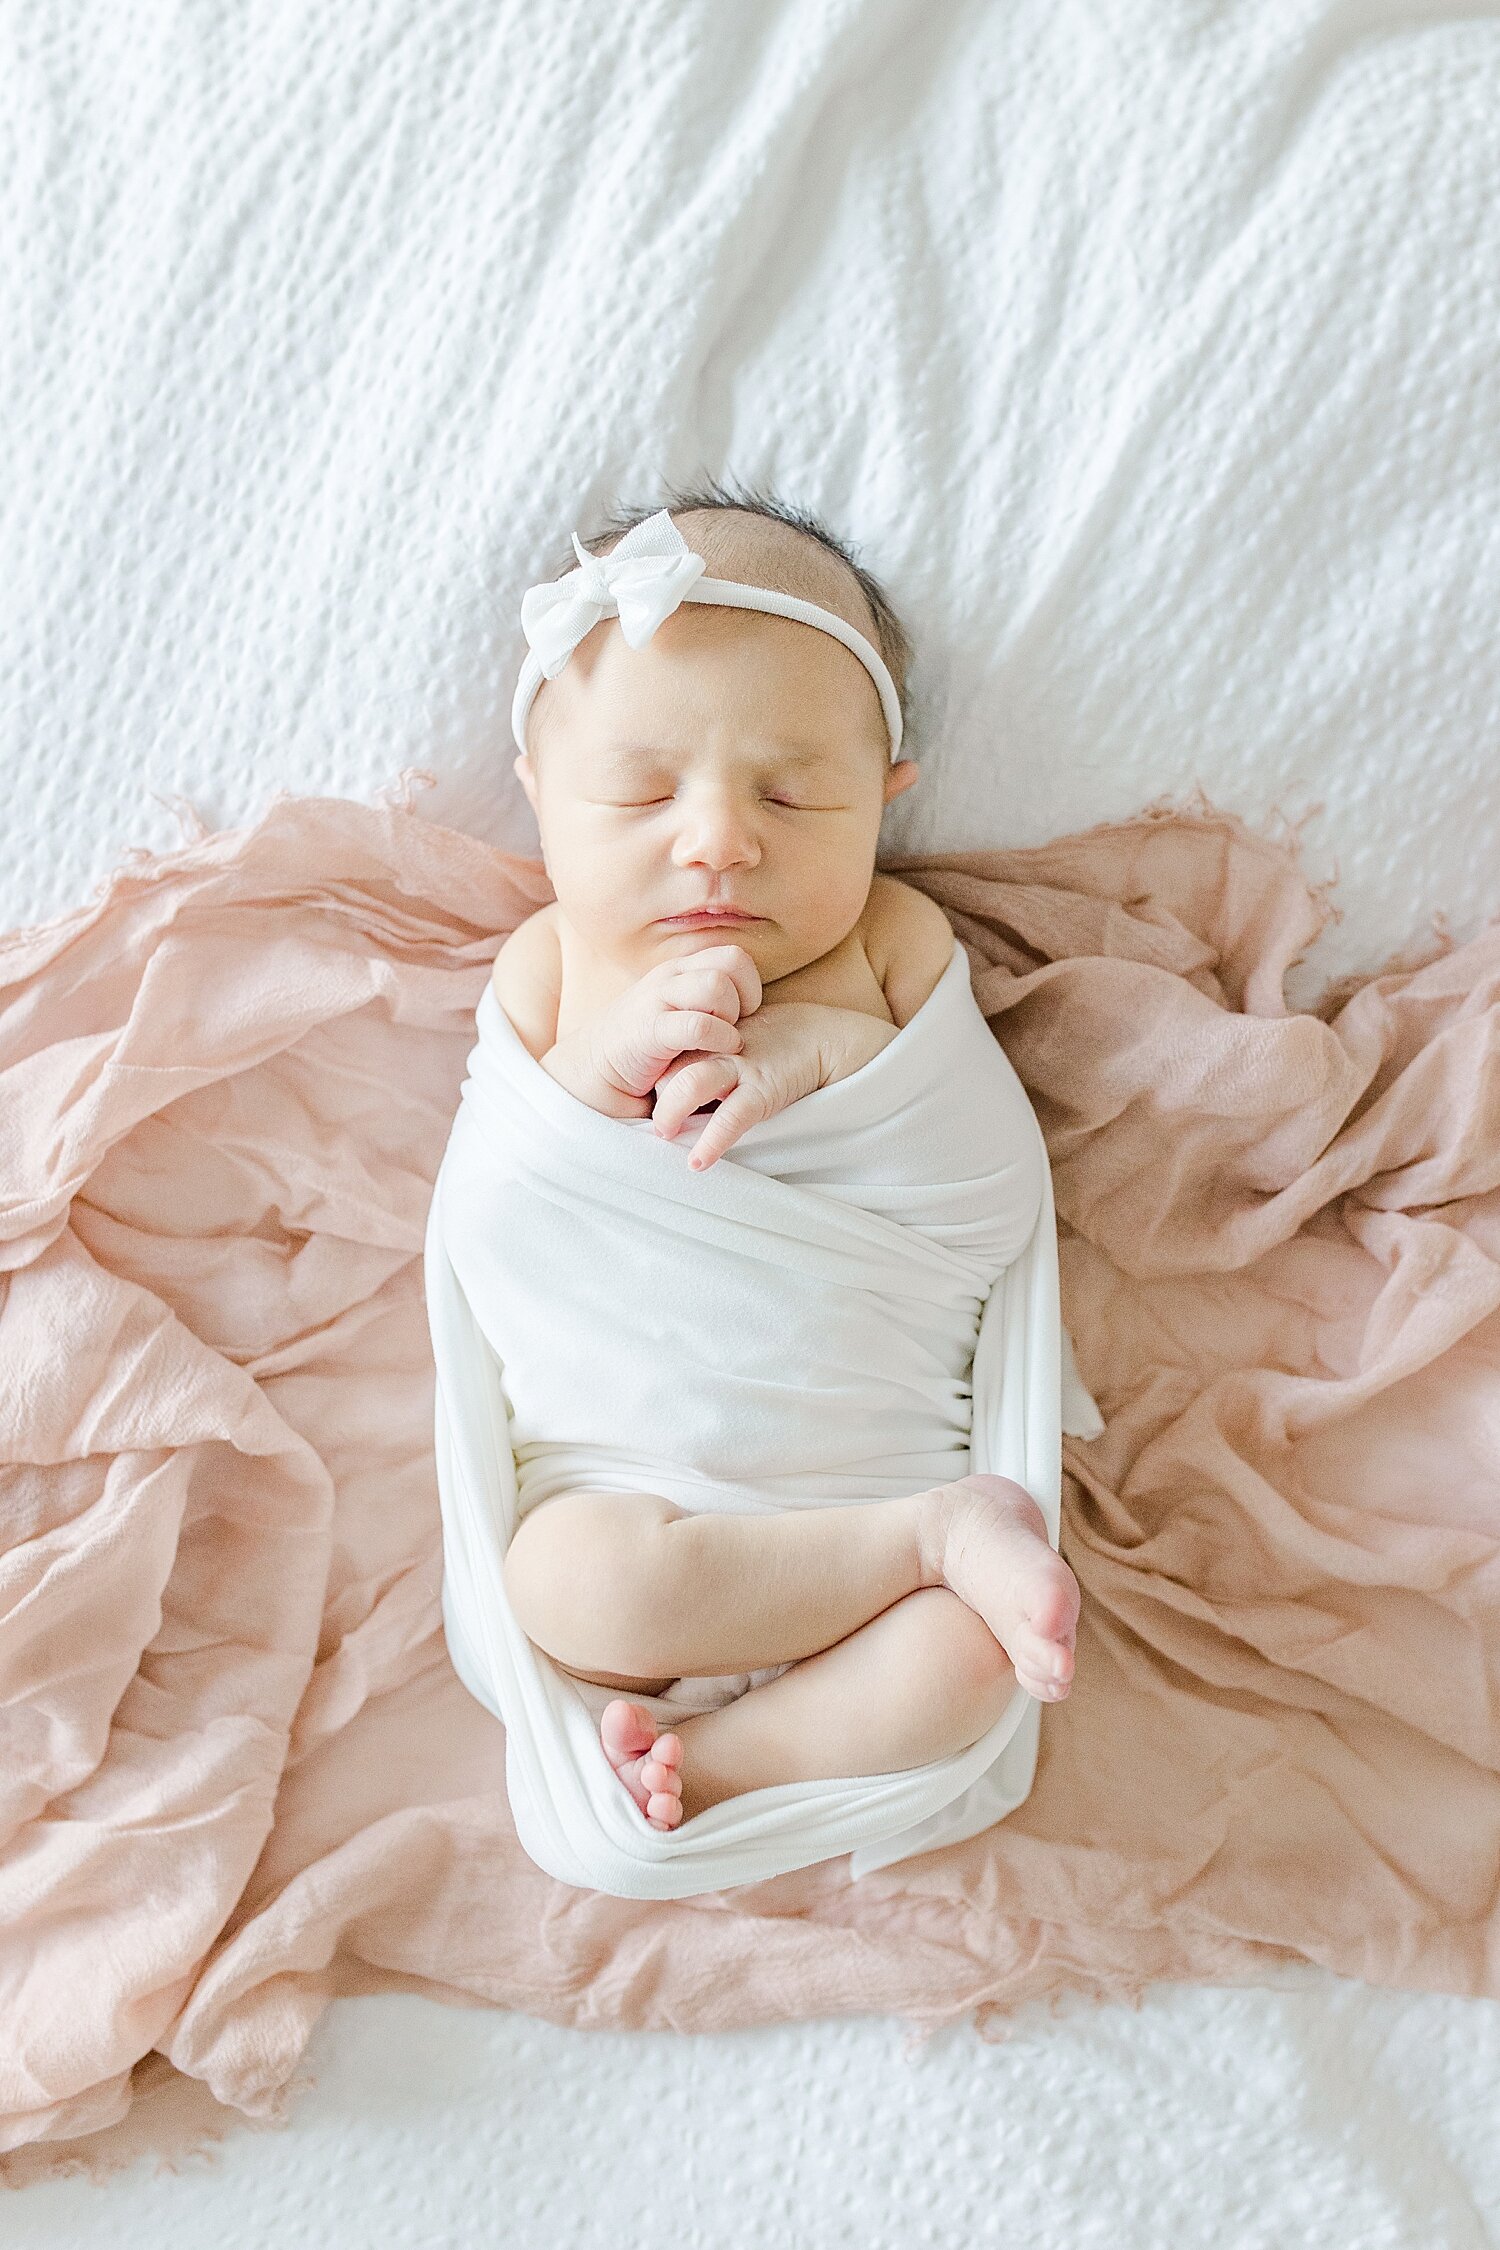 Lifestyle newborn photos of baby girl. Photo by Kristin Wood Photography.